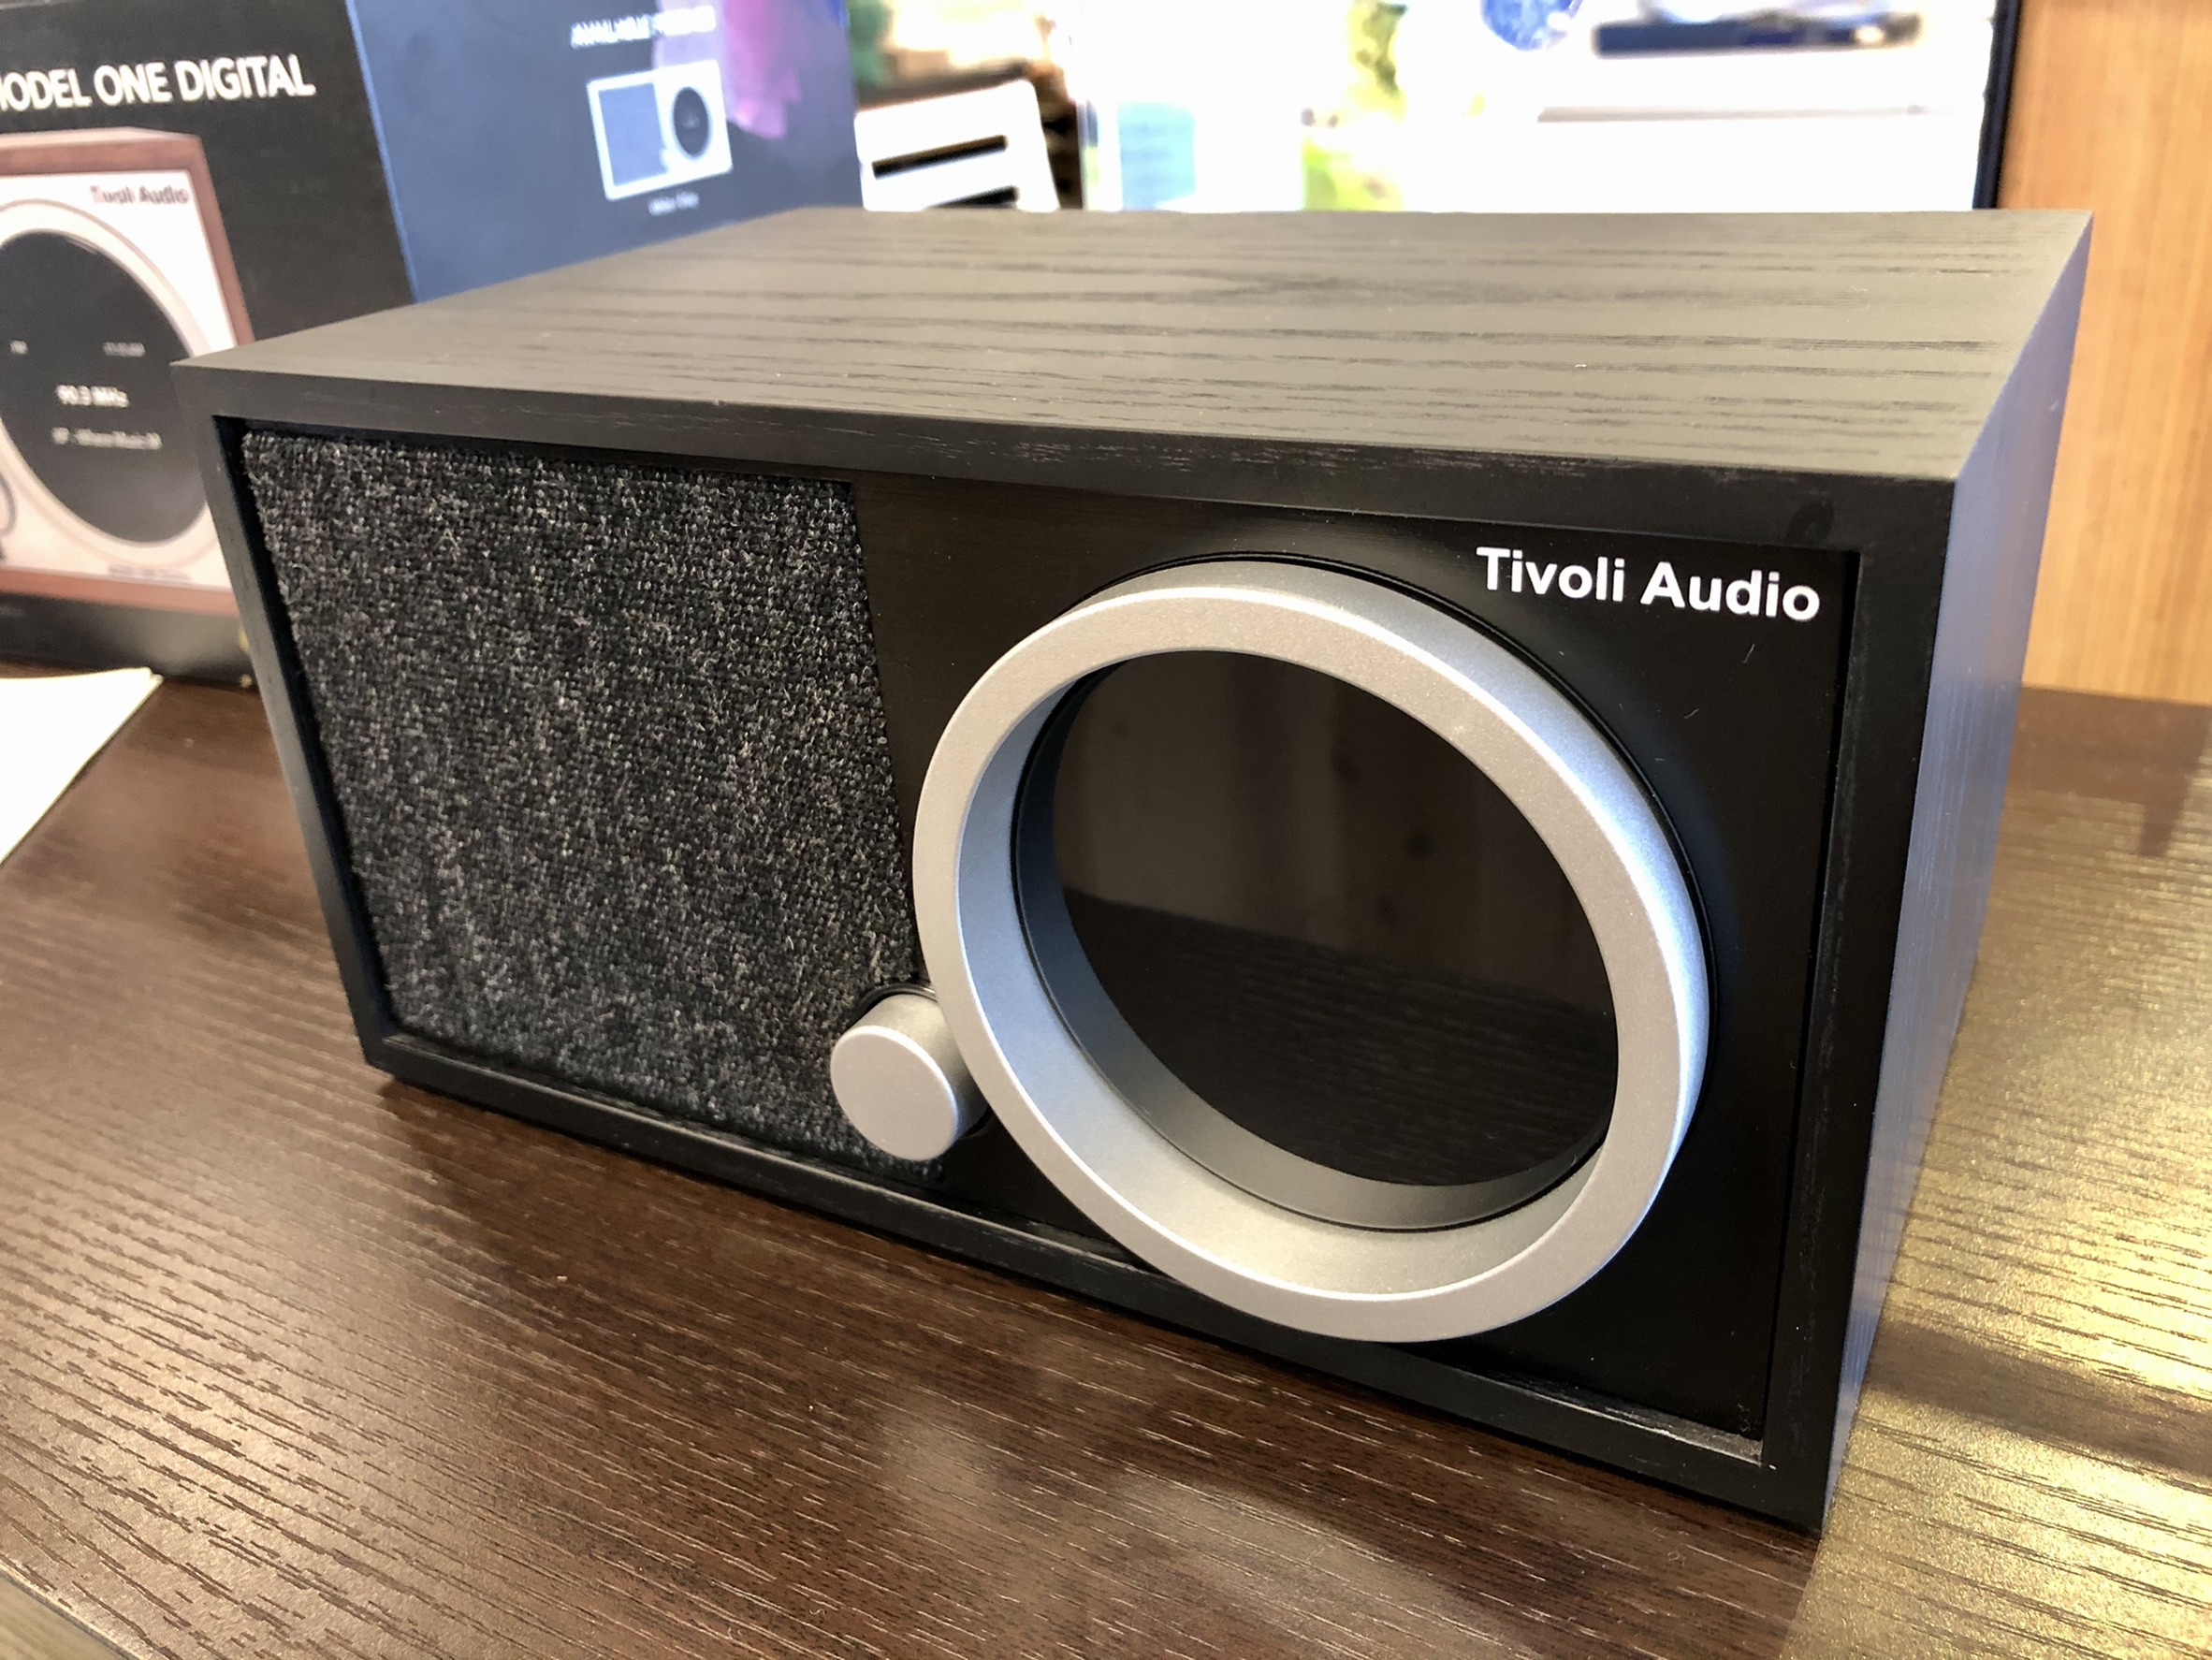 Tivolo Audio チボリオーディオ model one digital /モデルワンデジタル ハイブリッドHi-Fiオーディオ  買取しました。 愛知と岐阜のリサイクルショップ 再良市場